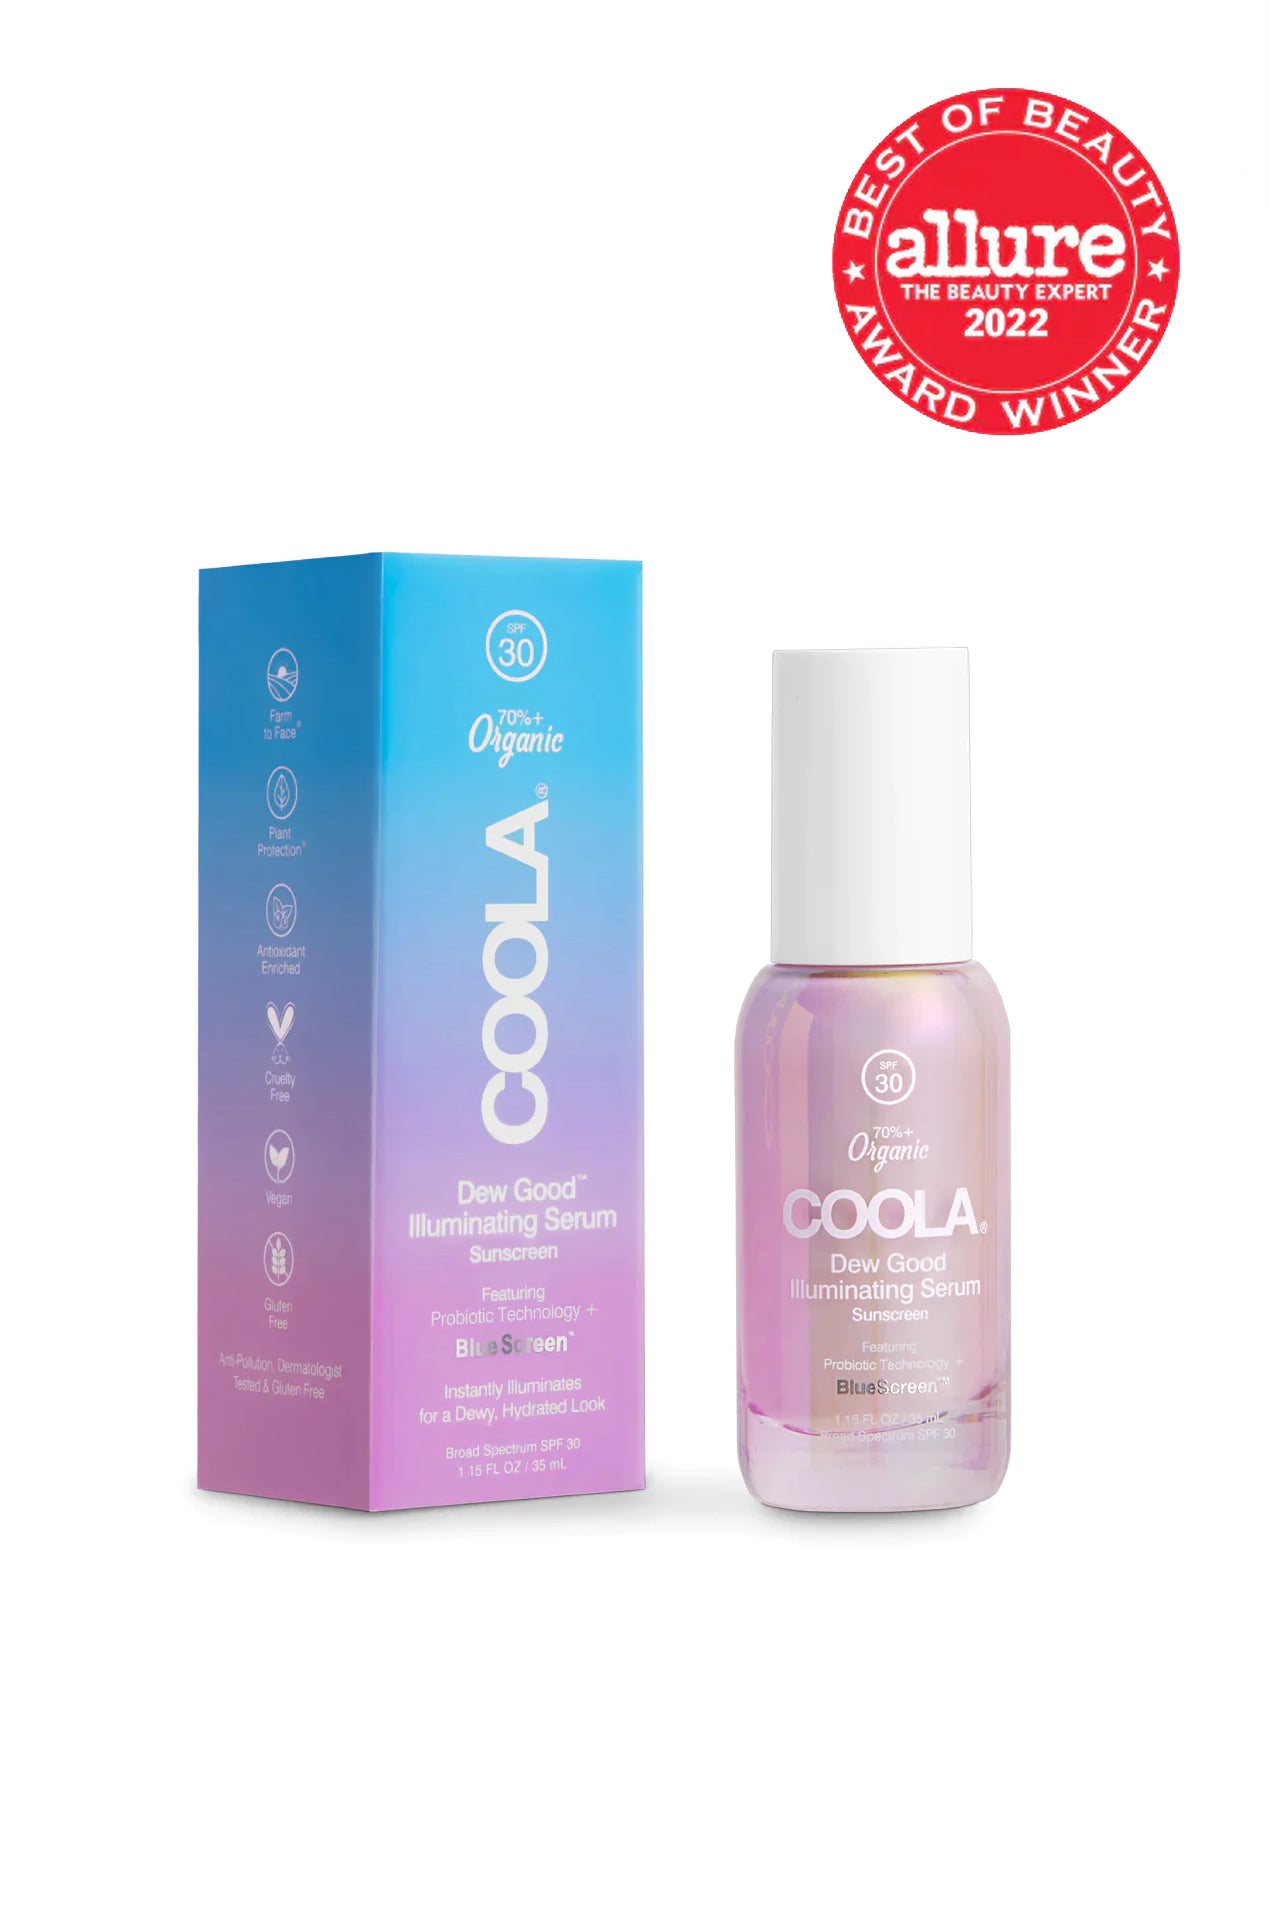 COOLA - Dew Good Illuminating Serum Probiotic Sunscreen - Magpie Style